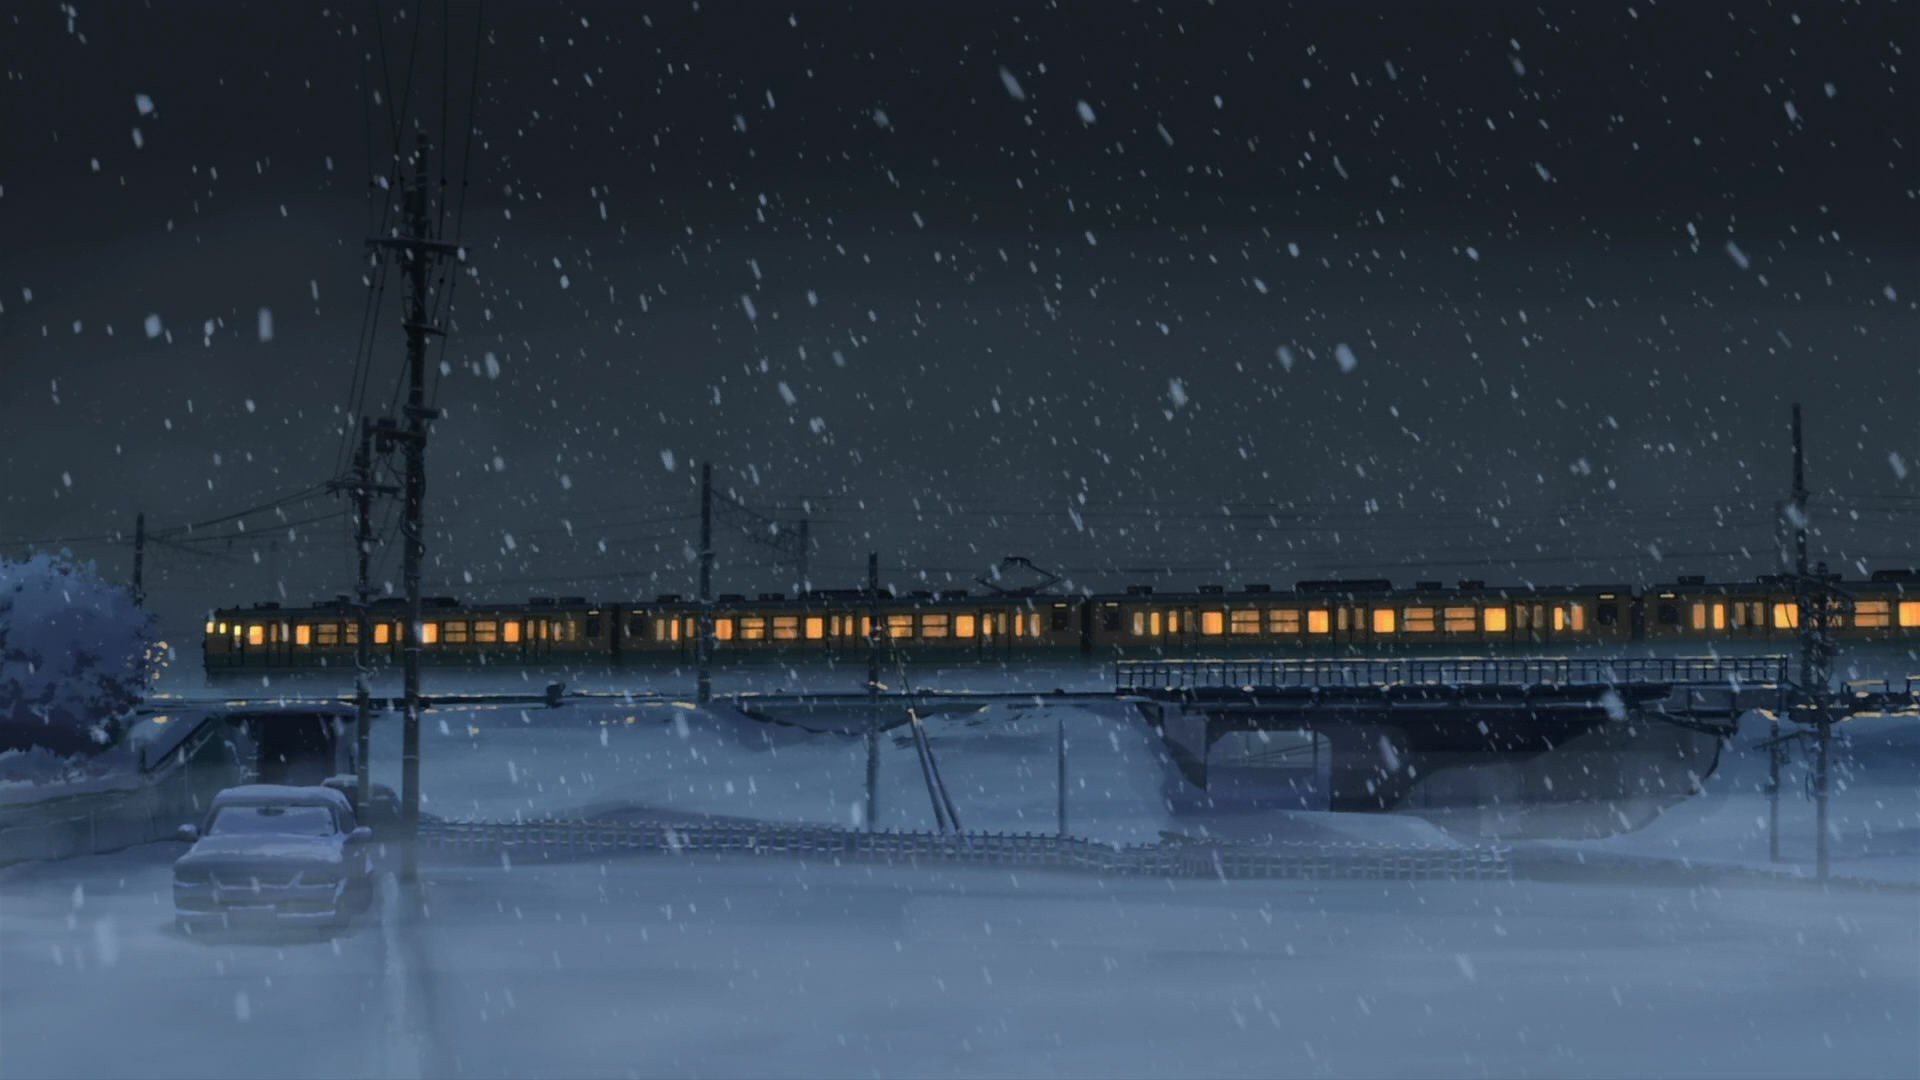 digital art, Anime, Night, Power lines, Train, Snow, Winter, 5 Centimeters Per Second, Utility pole Wallpaper